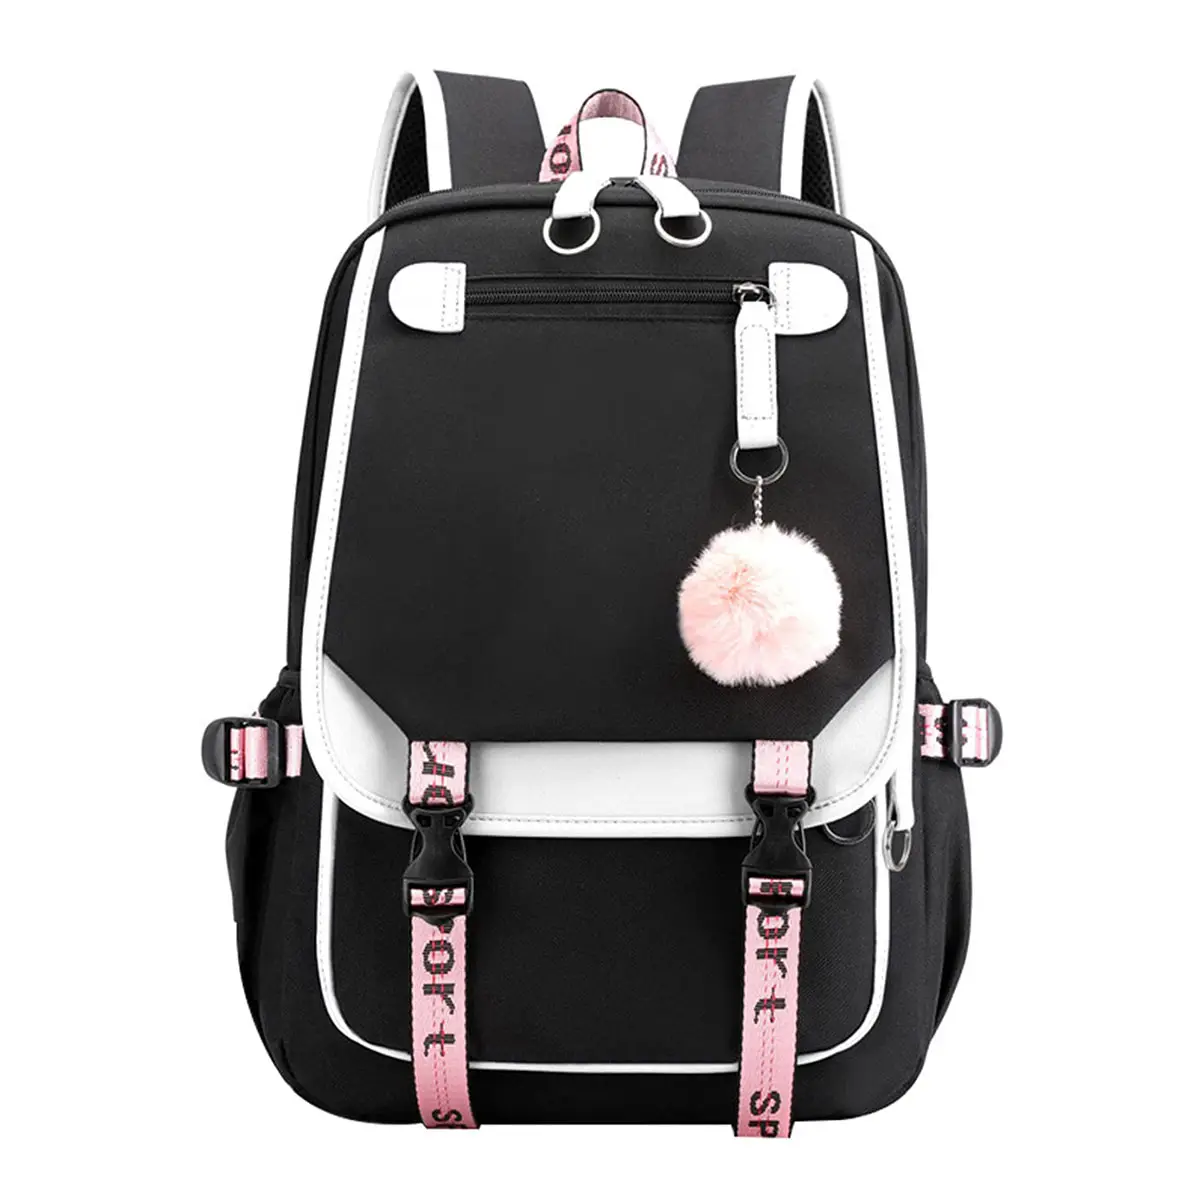 White and black pom pom Funny Kitty Cat School Backpacks for Girls Kids BoysNebula Book Bag